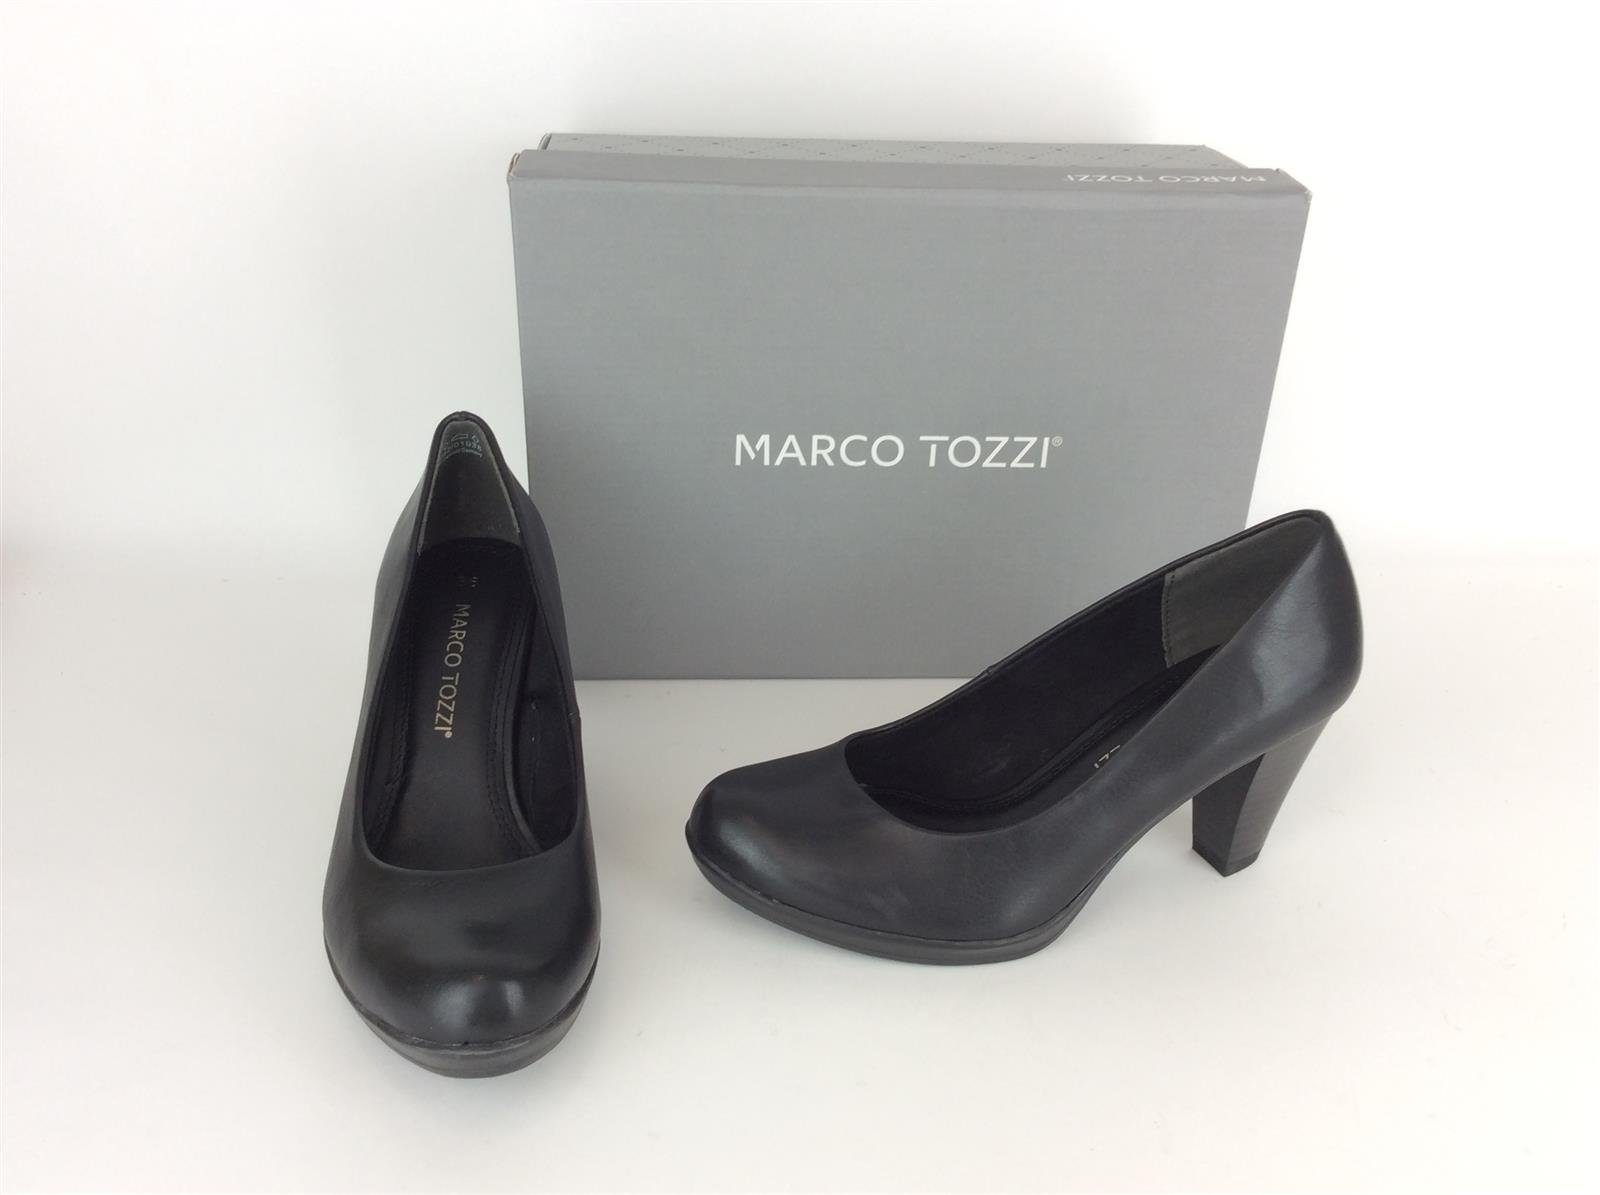 MARCO TOZZI Freizeittasche »Marco Tozzi Damen Plateau-Pumps schwarz, 6cm  Absat« online kaufen | OTTO